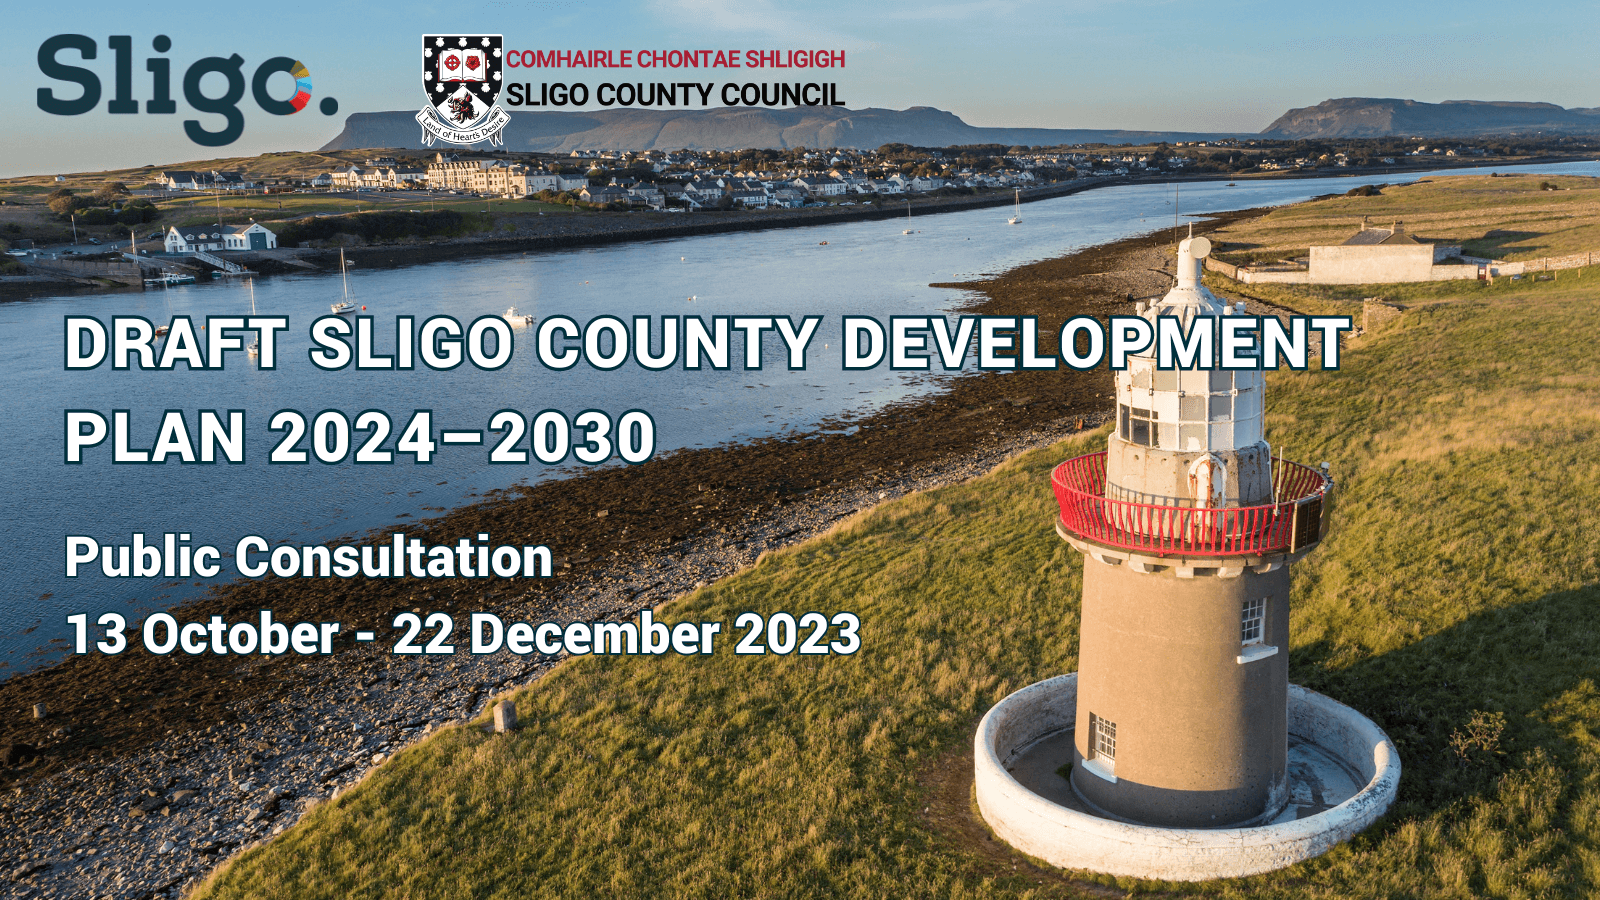 Draft Sligo County Development Plan 2024-2030